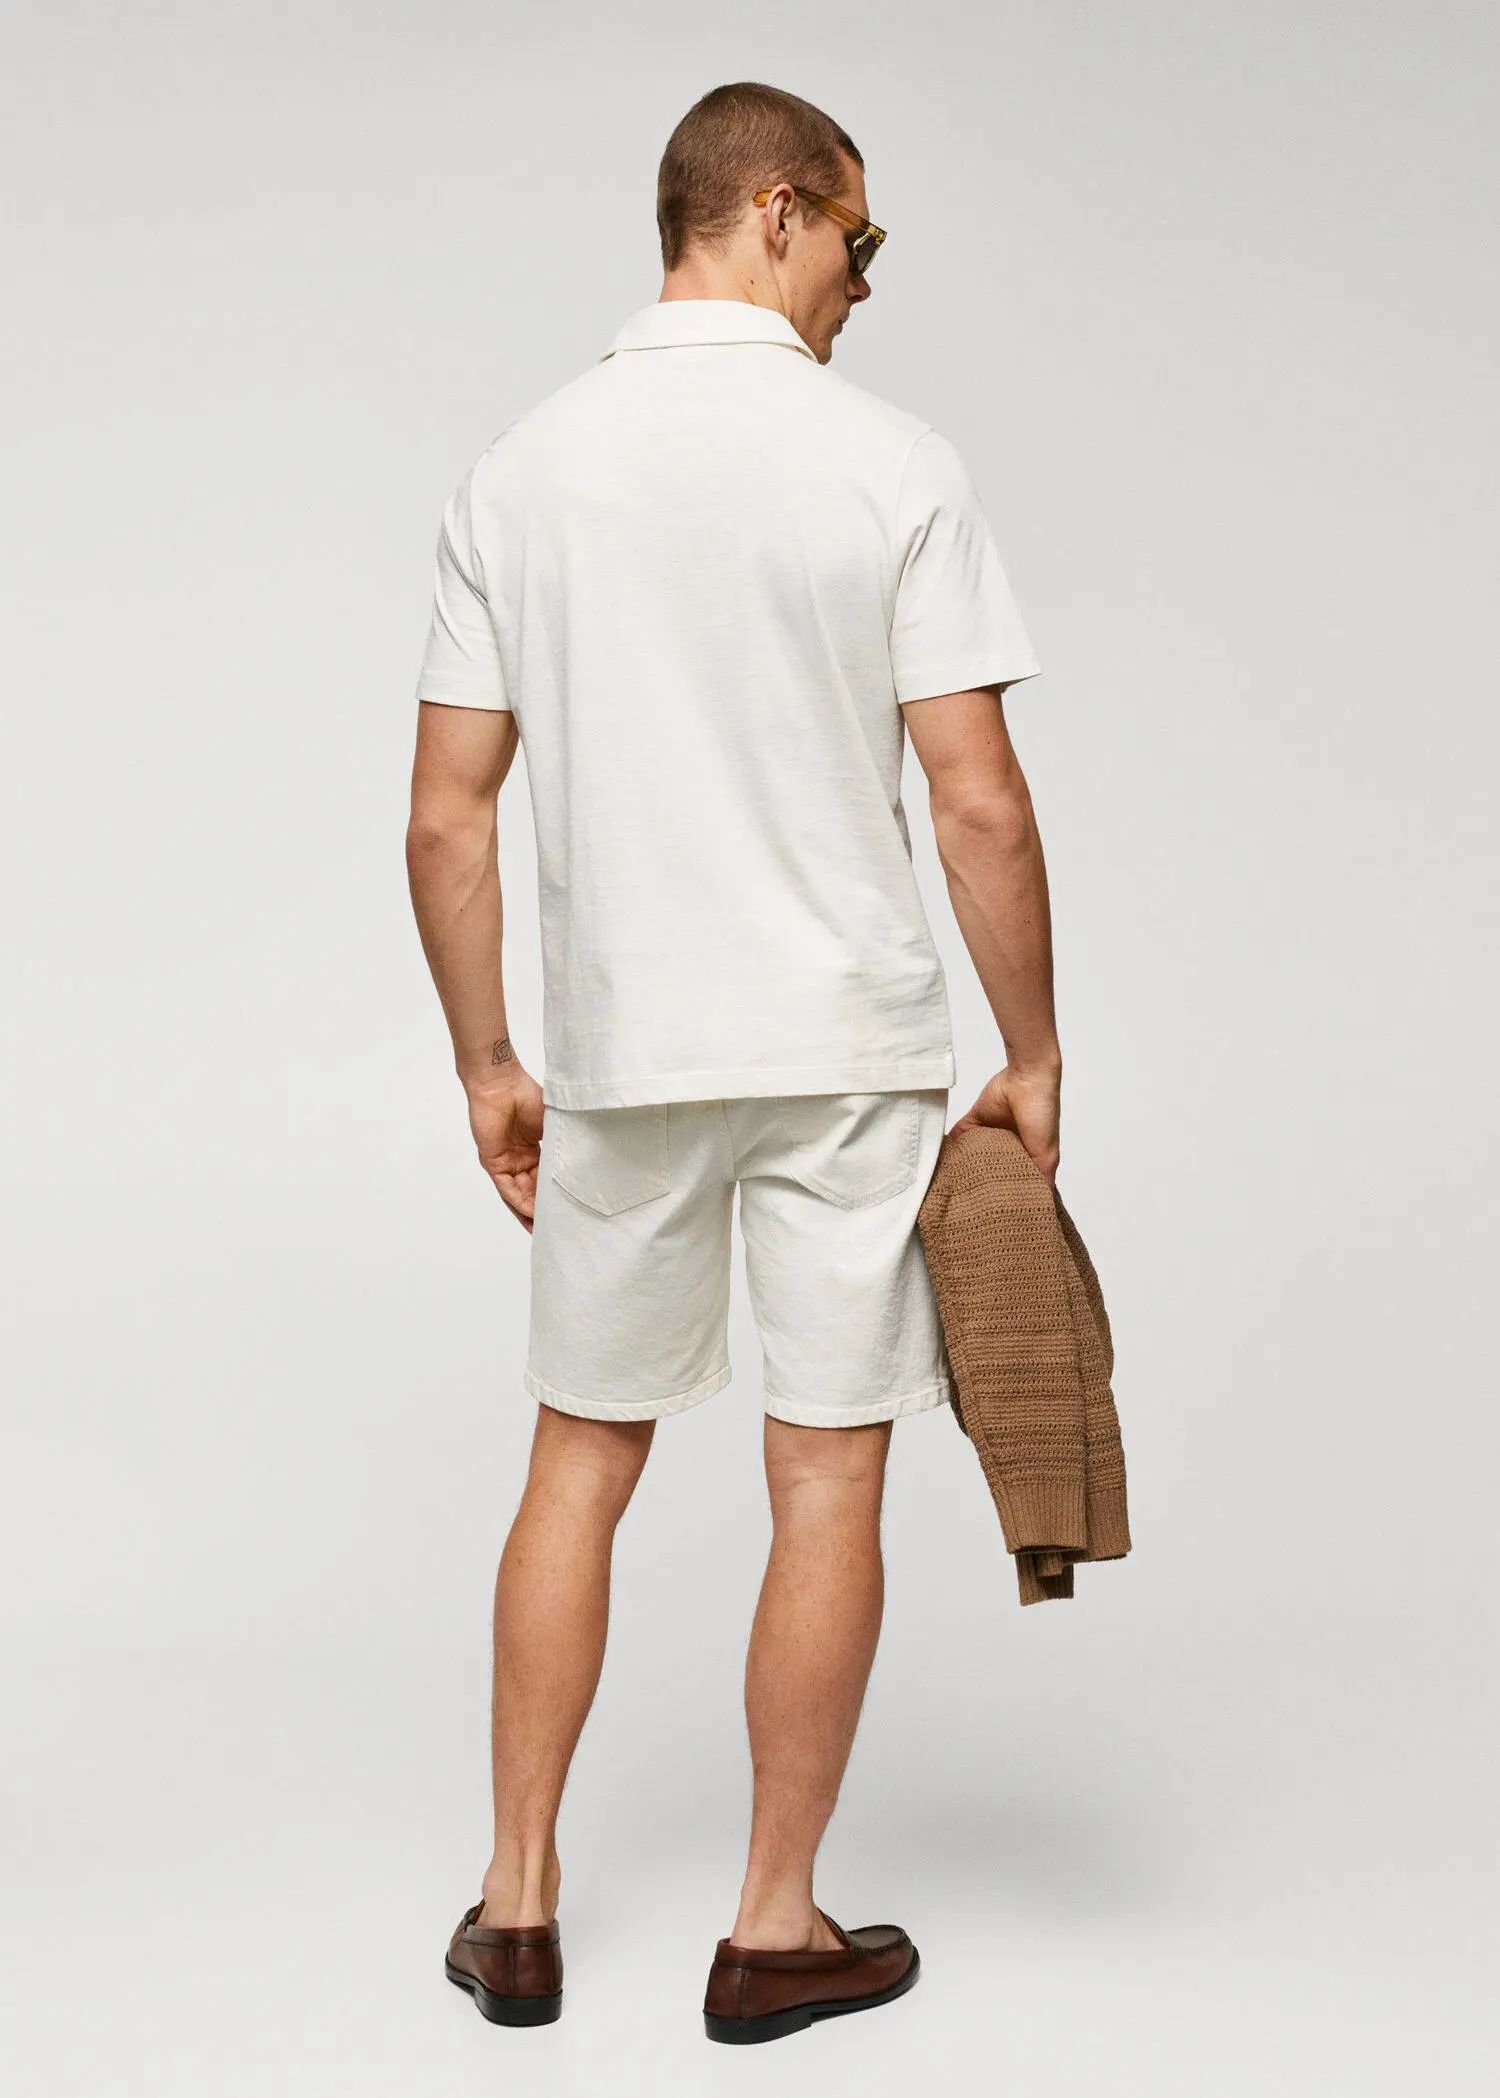 Mango 100% cotton basic polo shirt . a man in white shorts and a white polo shirt. 